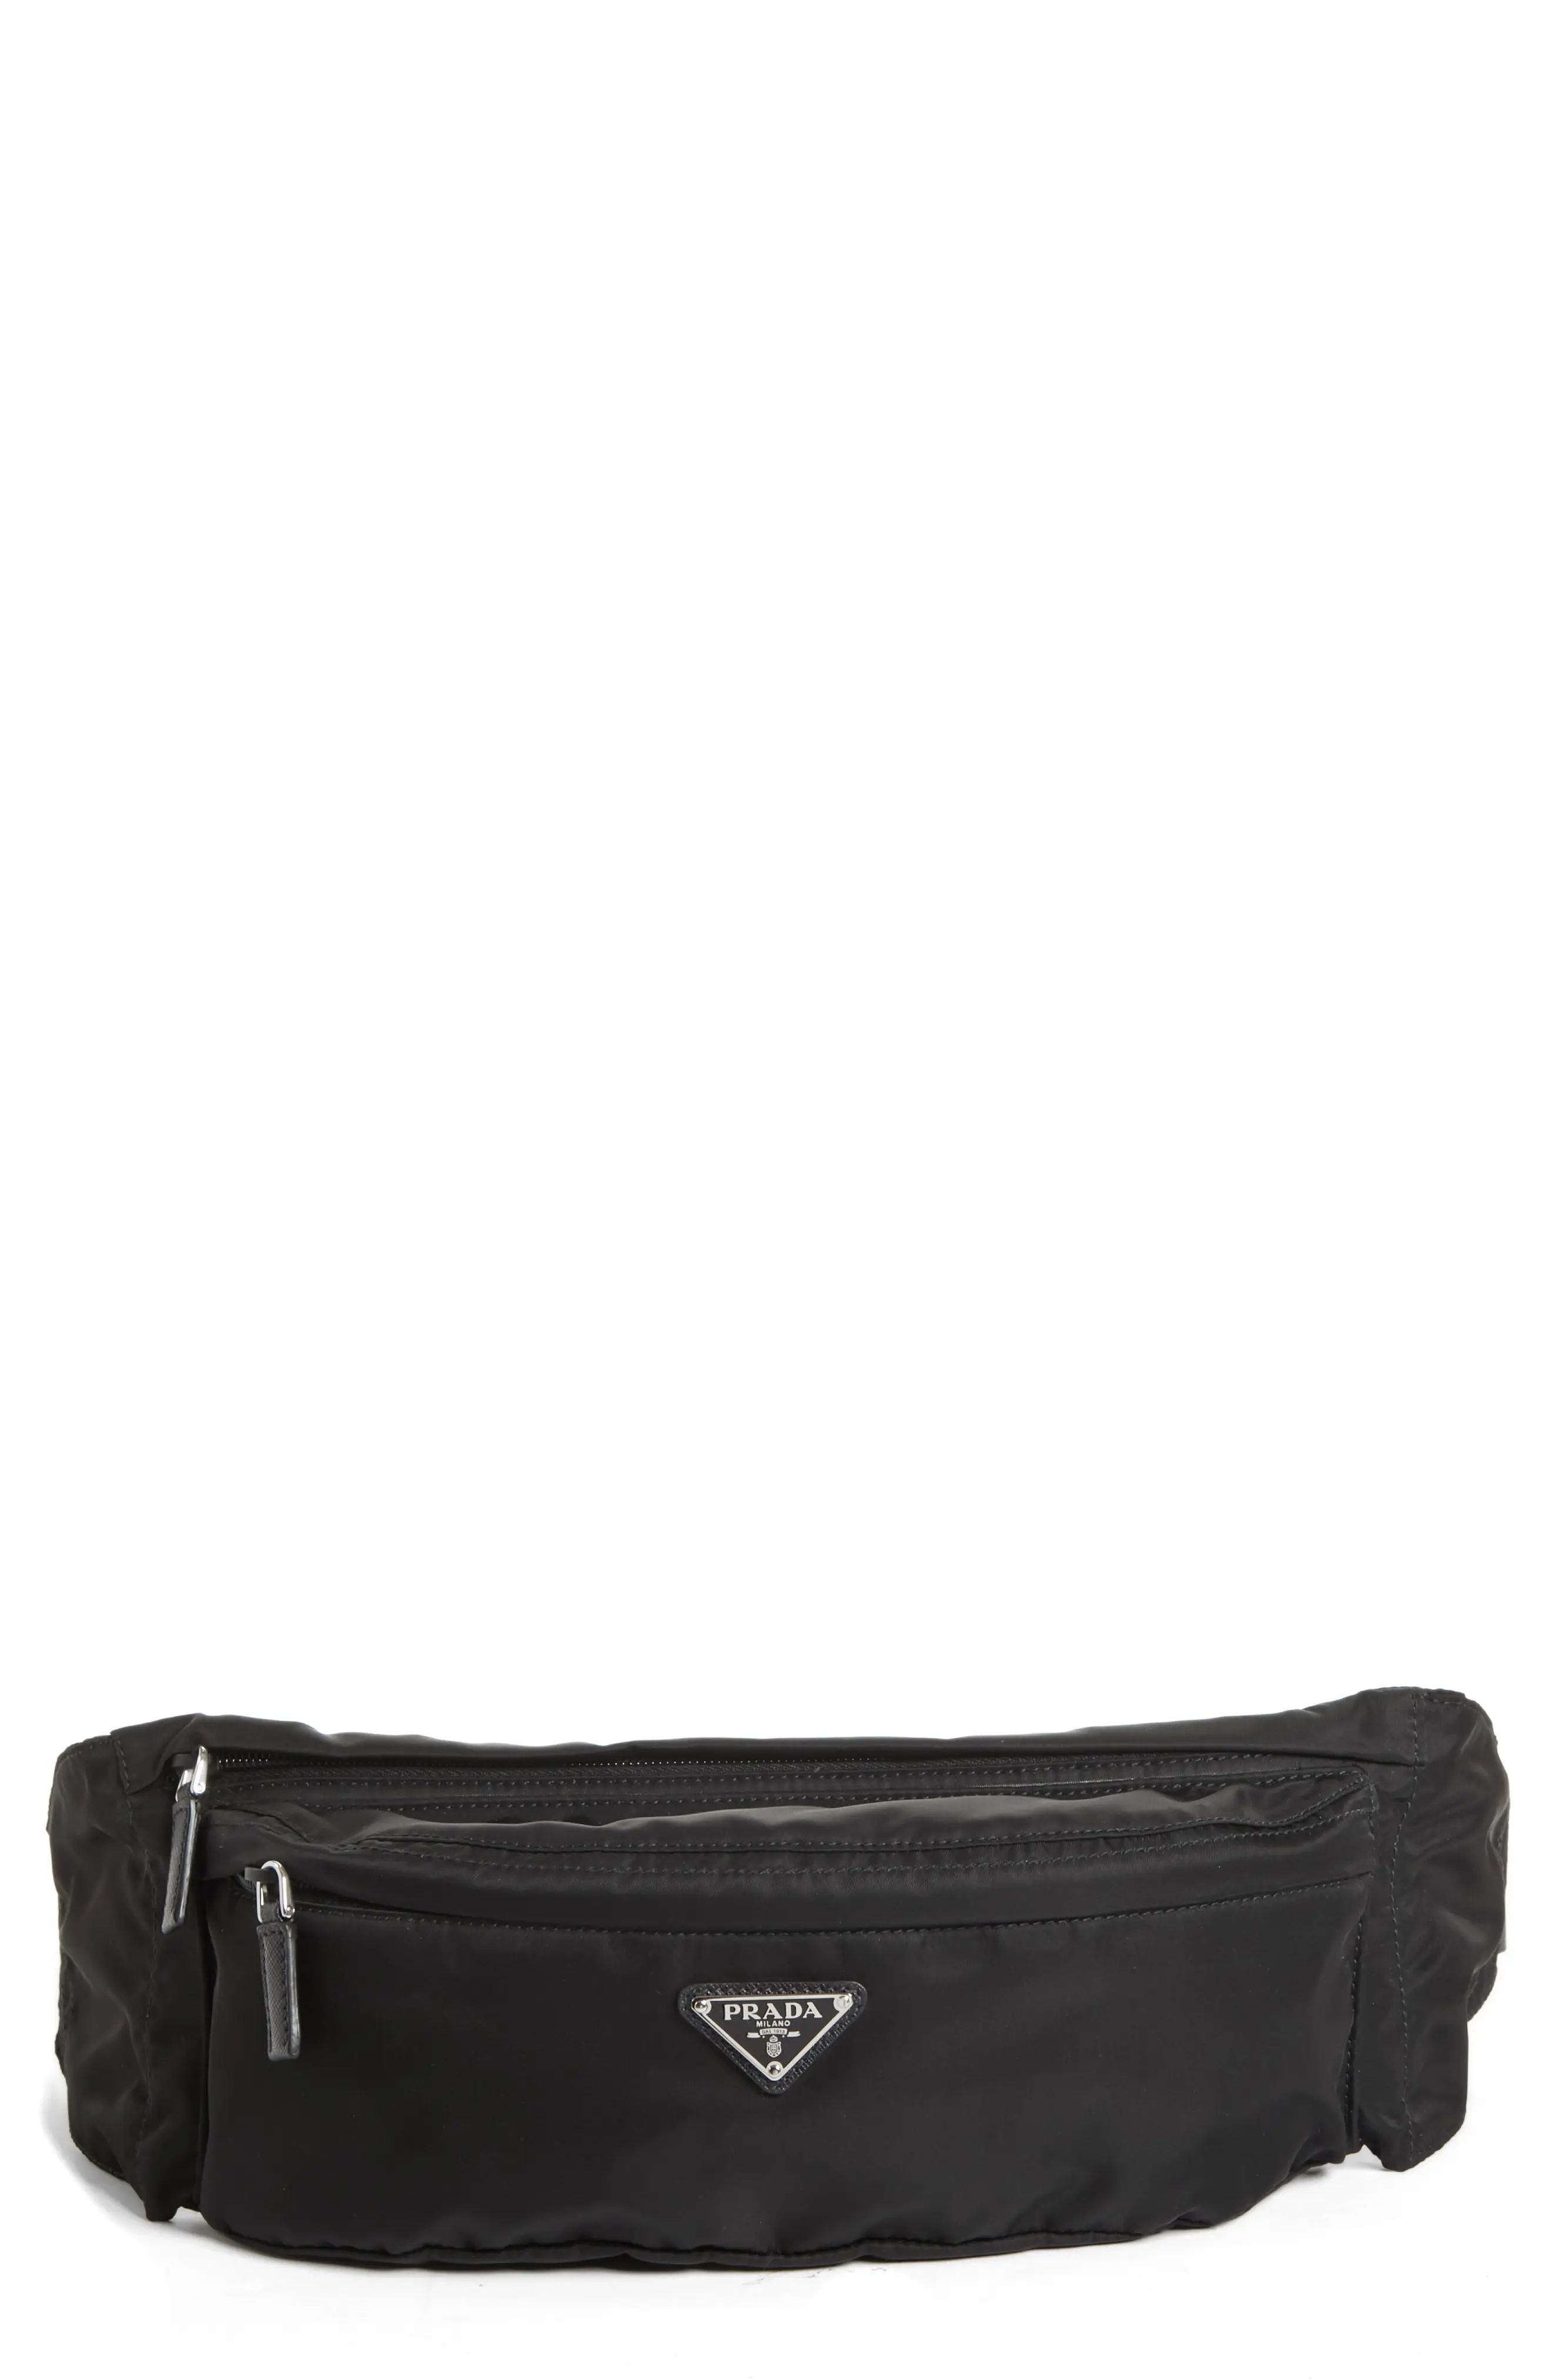 Prada Nylon Belt Bag - Black | Nordstrom